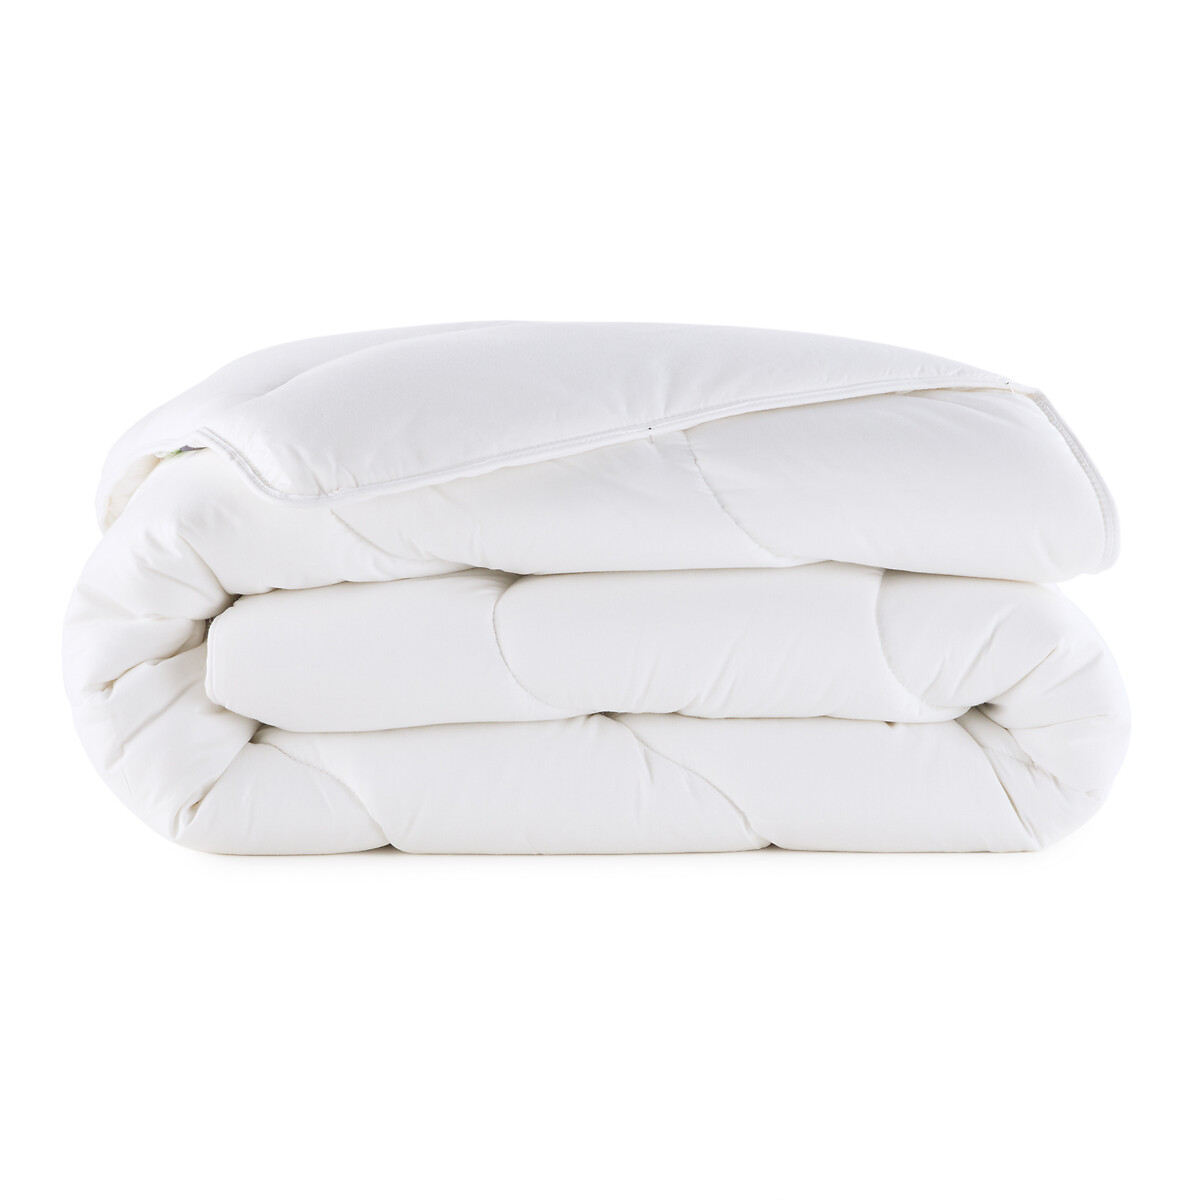 Одеяло Средней плотности из синтетики 300 гм 240 x 220 см белый LaRedoute, размер 240 x 220 см - фото 1